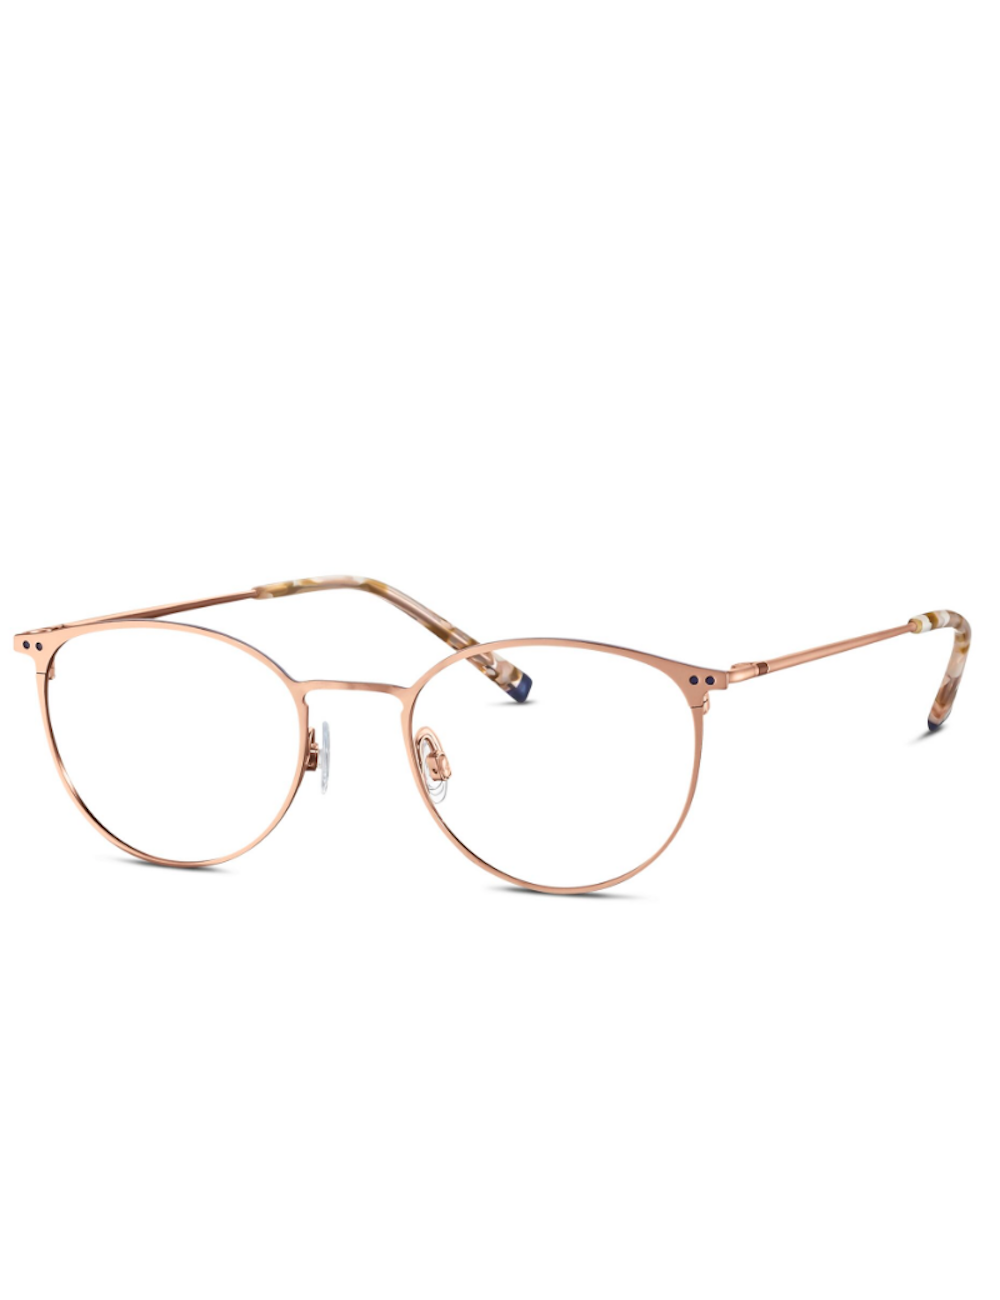 Humphrey's eyewear 582282 20 occhiali da vista rotondi in metallo